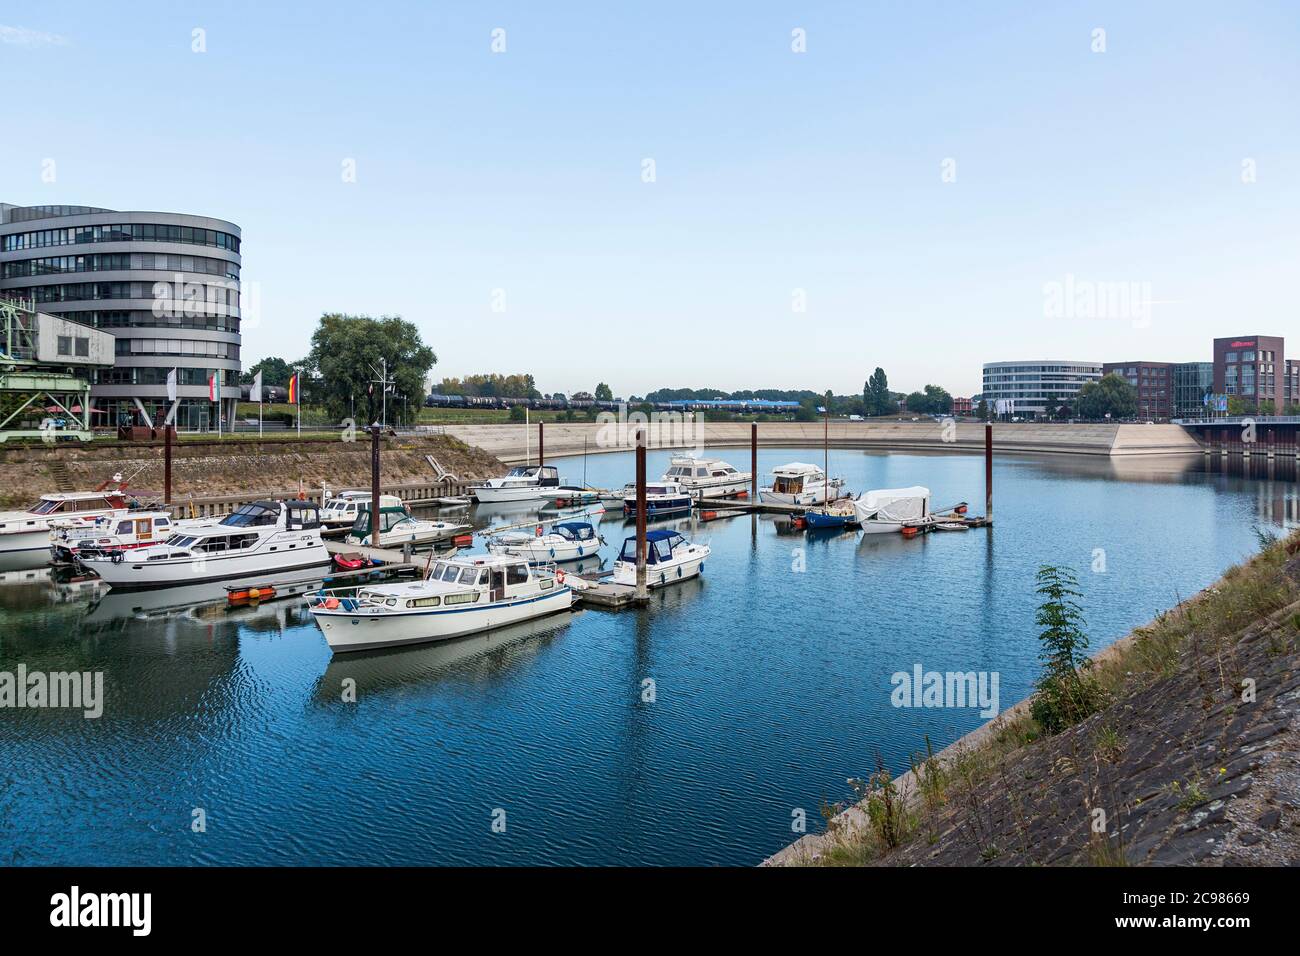 Marina, Eurogate, geplant, nicht gebaut, Duisburg, Innenhafen Foto Stock